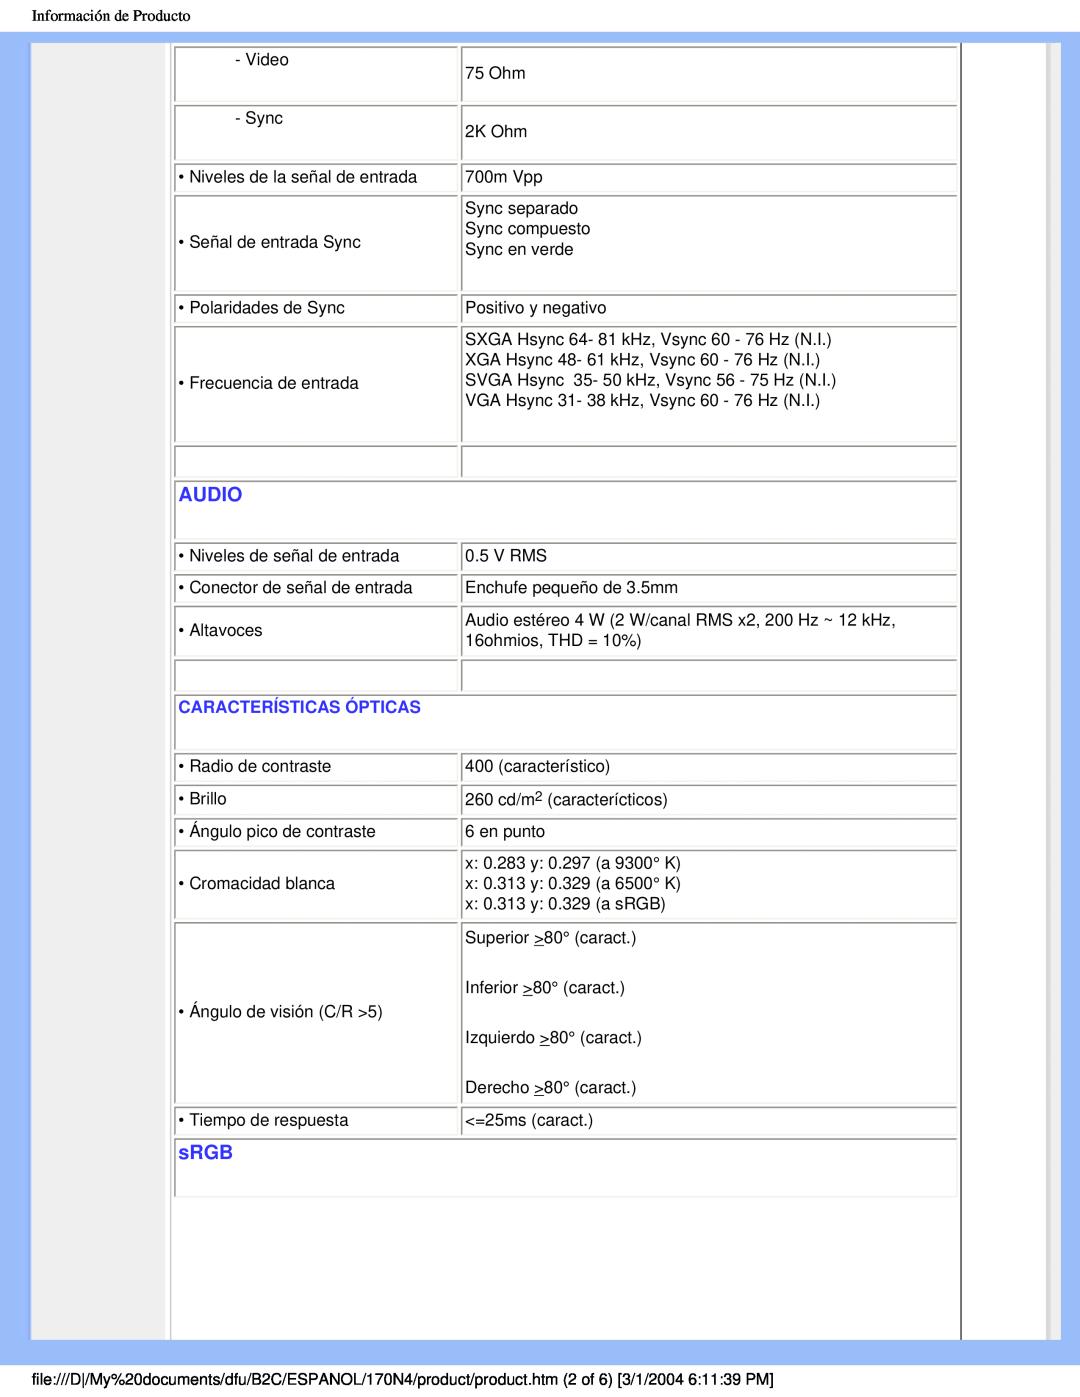 Philips 170N4 user manual Audio, sRGB, Características Ópticas 